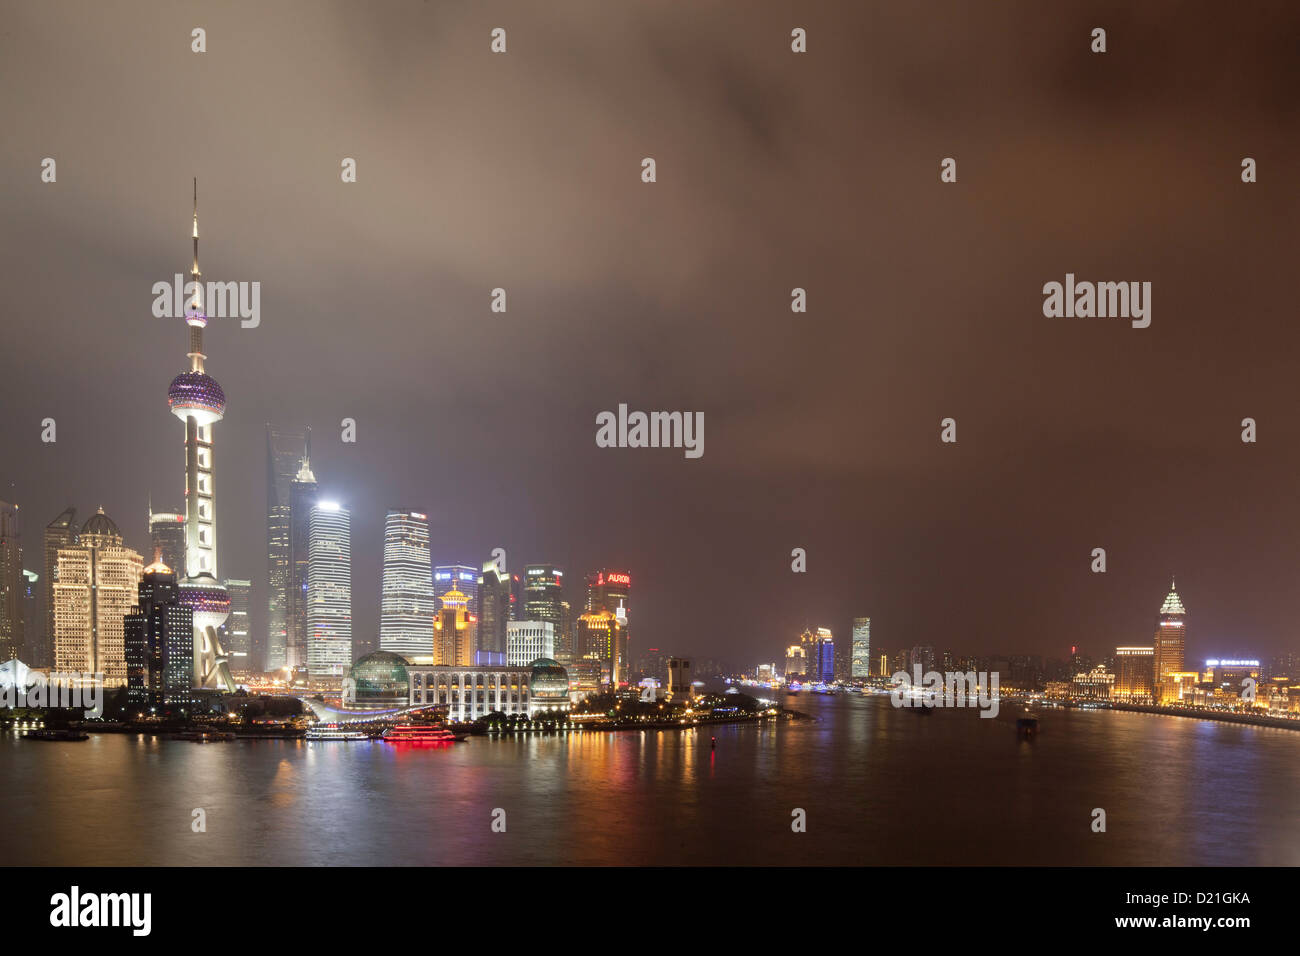 Skyline von Pudong am Huangpu River bei Nacht, Shanghai, China, Asien Stockfoto